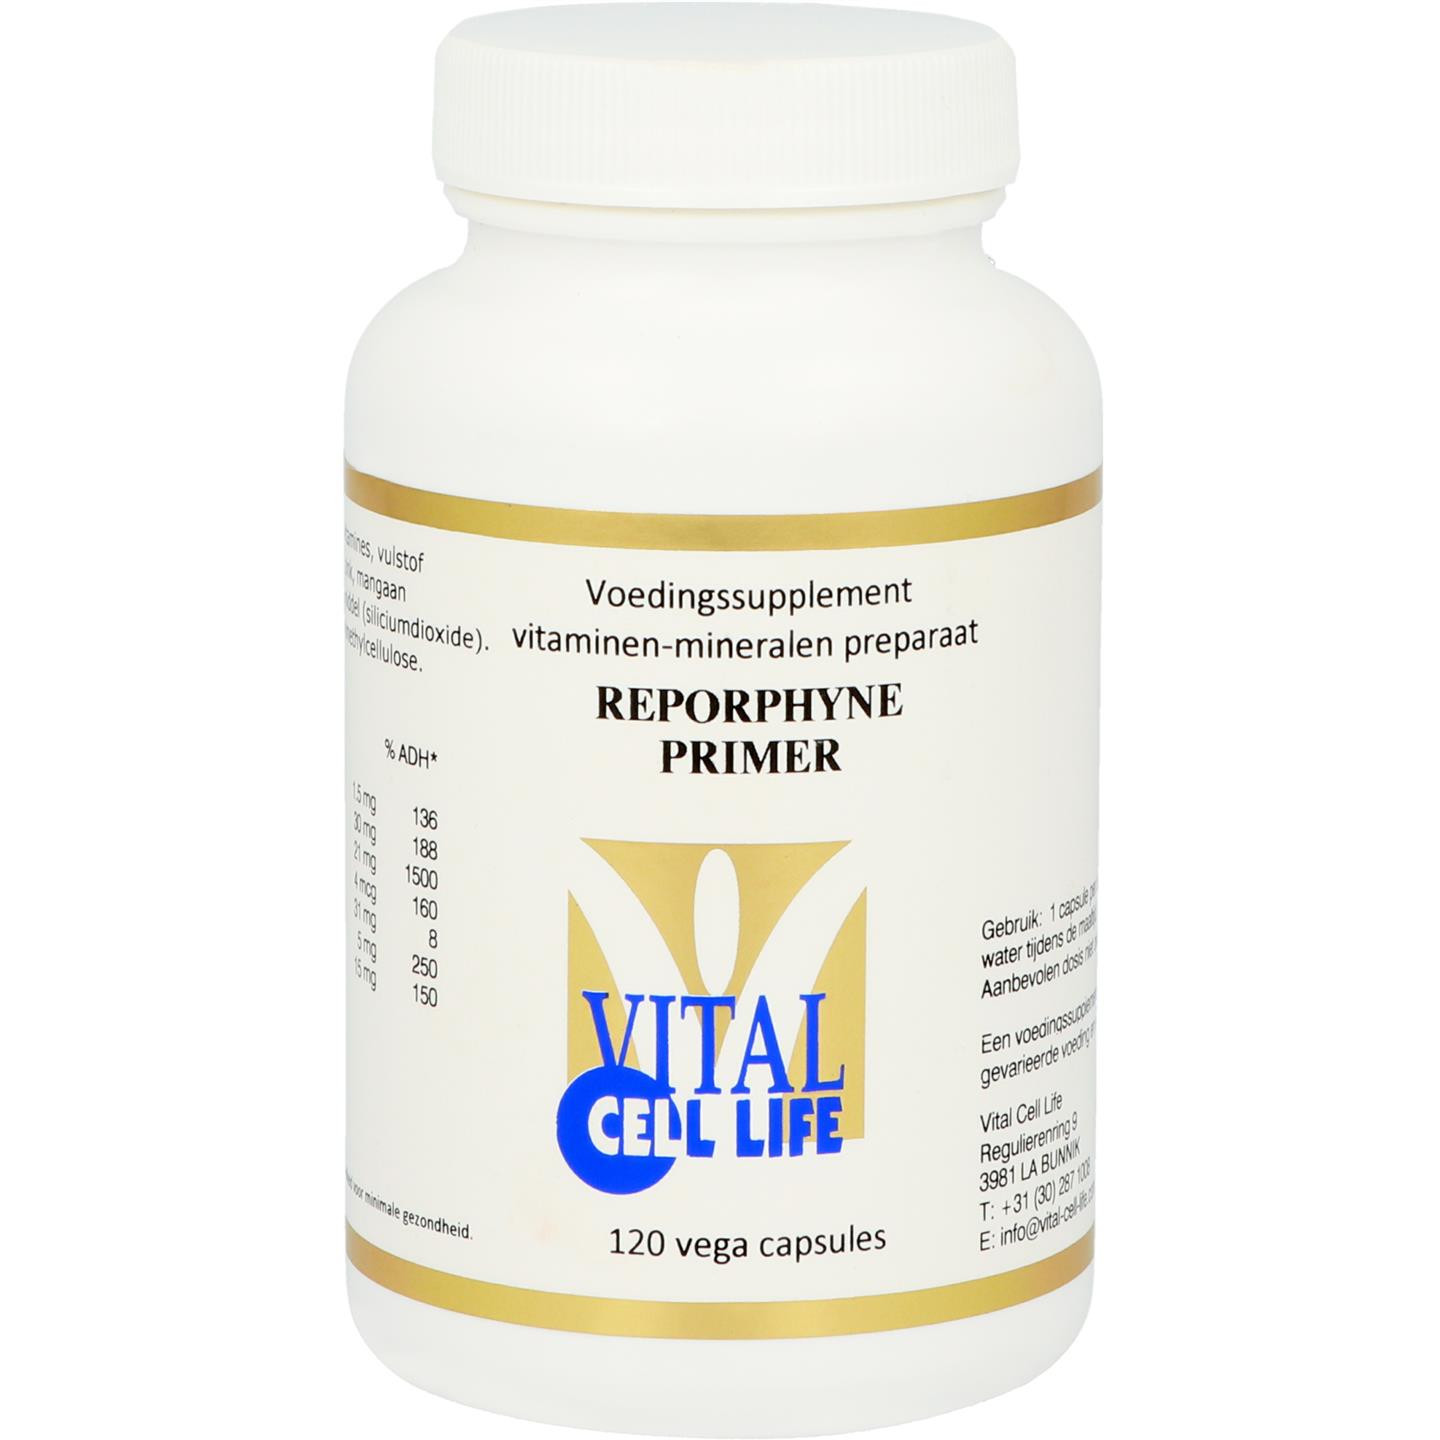 Reporphyne Primer